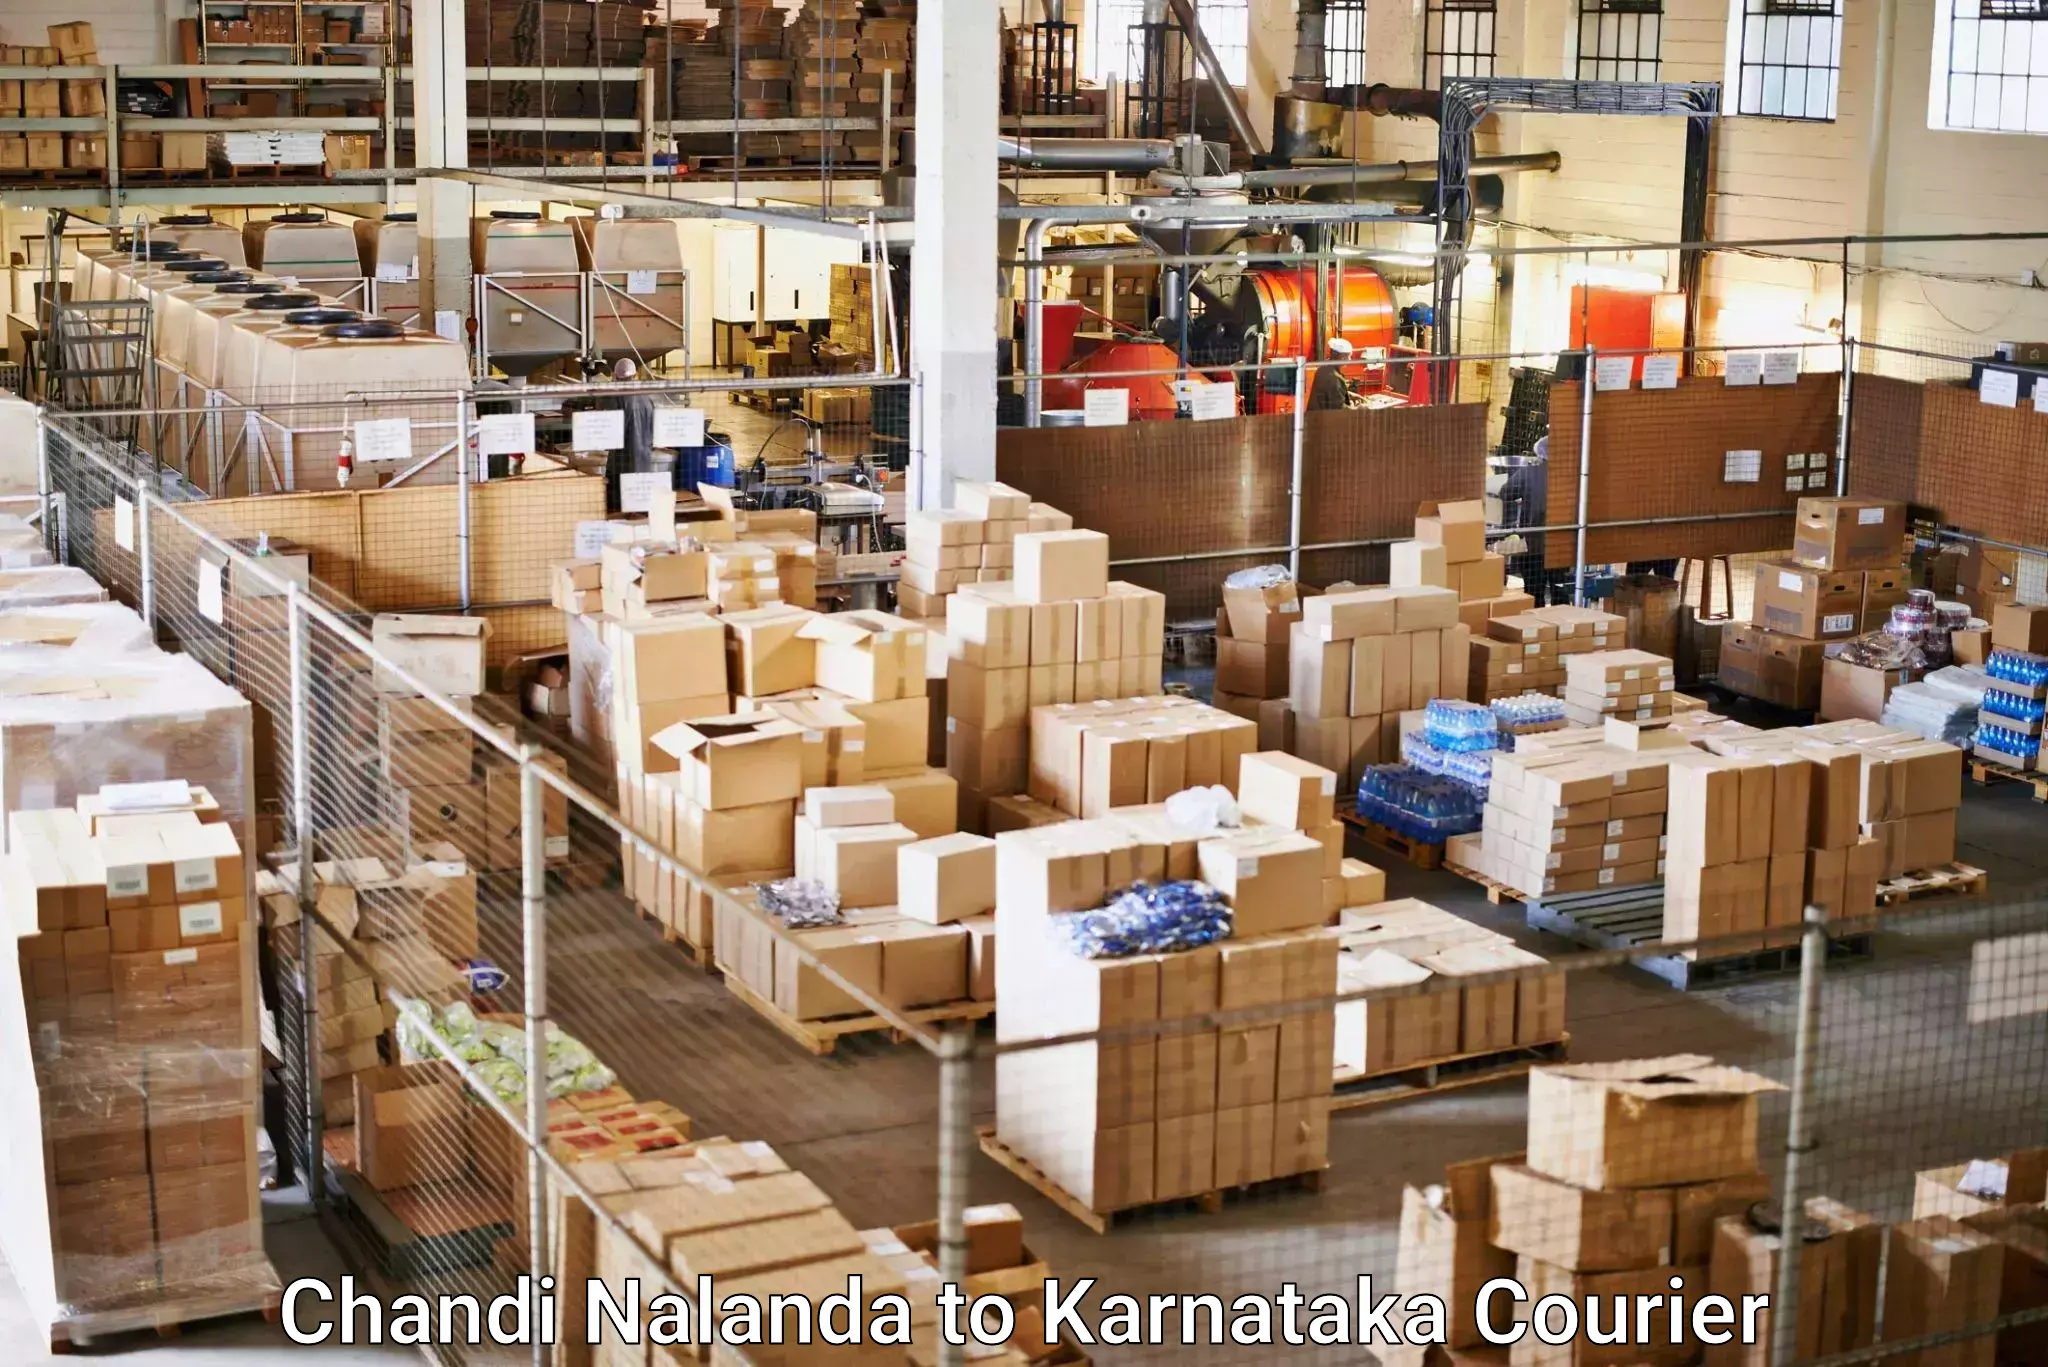 Package delivery network Chandi Nalanda to Karnataka